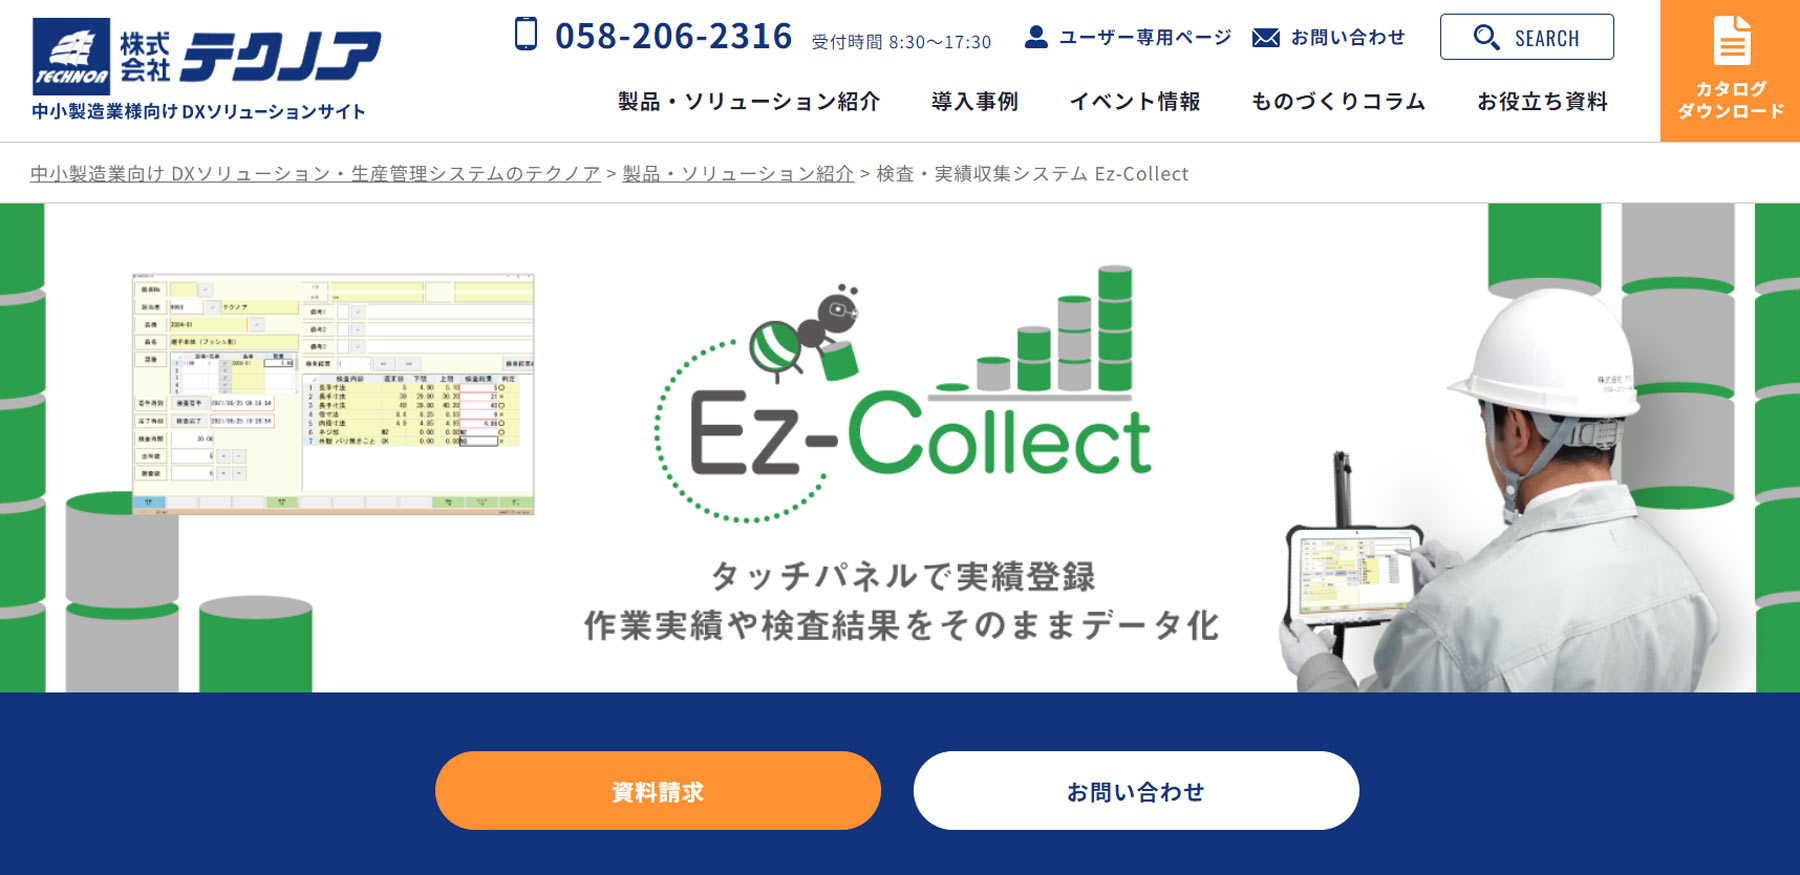 Ez-Collect公式Webサイト